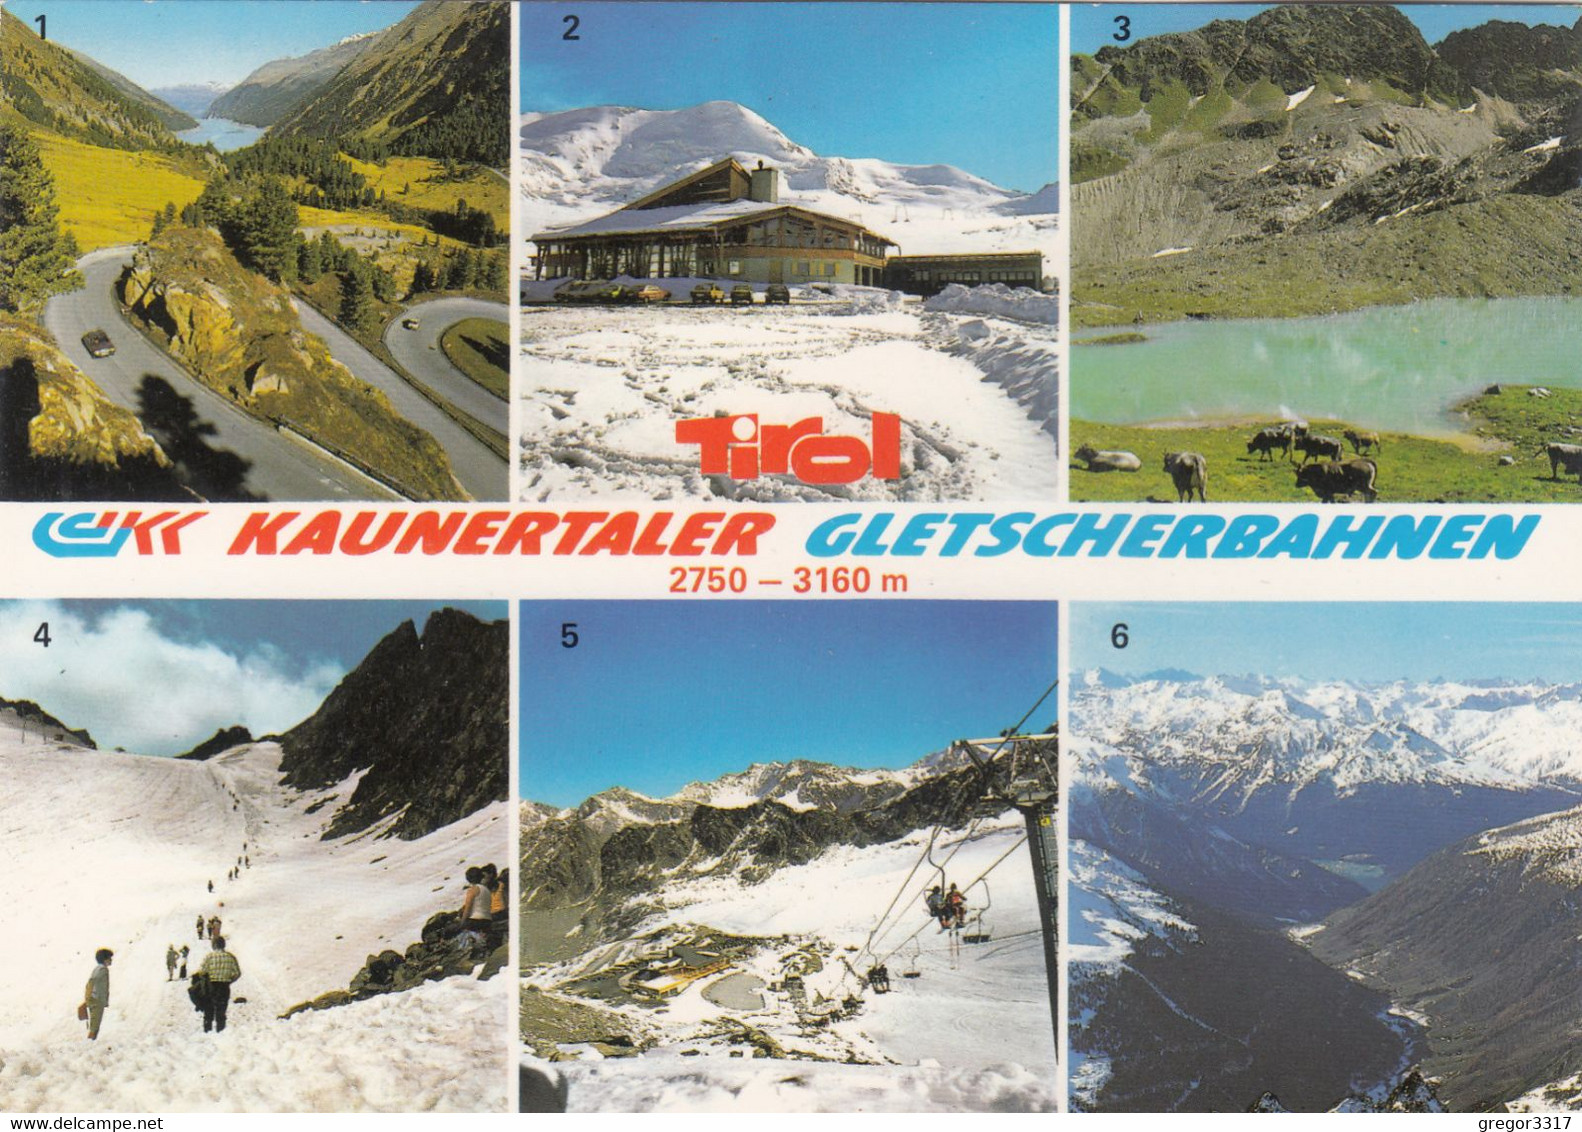 8716) KAUNERTAL - Kaunertaler Gletscherbahnen - Tolle Mehrbild AK Skifahrer Sessellift Wieseljaggl Teich Usw. - Kaunertal